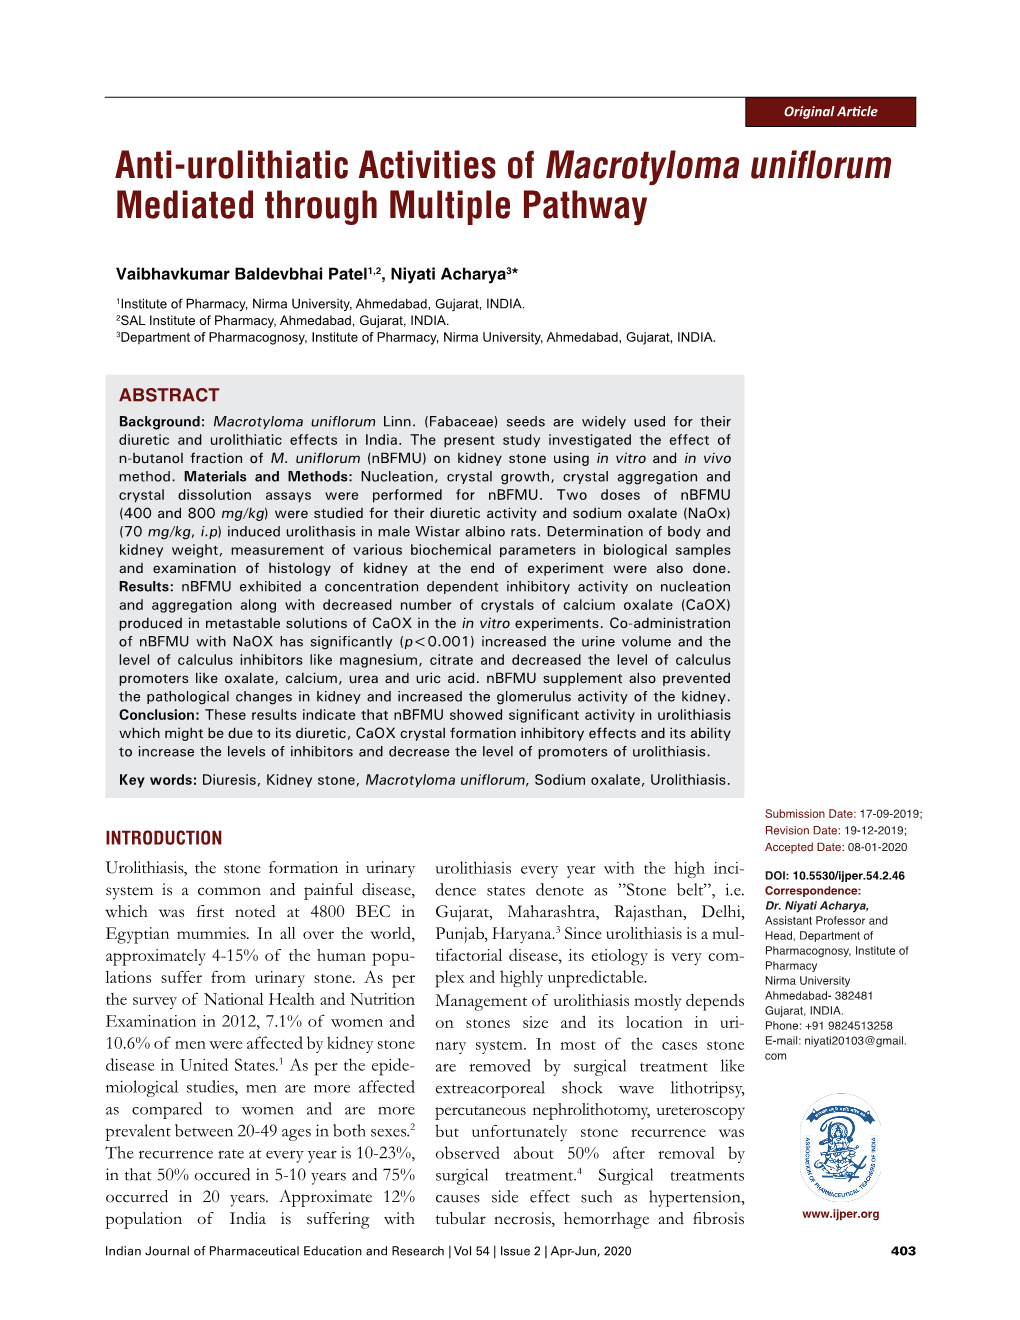 Anti-Urolithiatic Activities of Macrotyloma Uniflorum Mediated Through Multiple Pathway